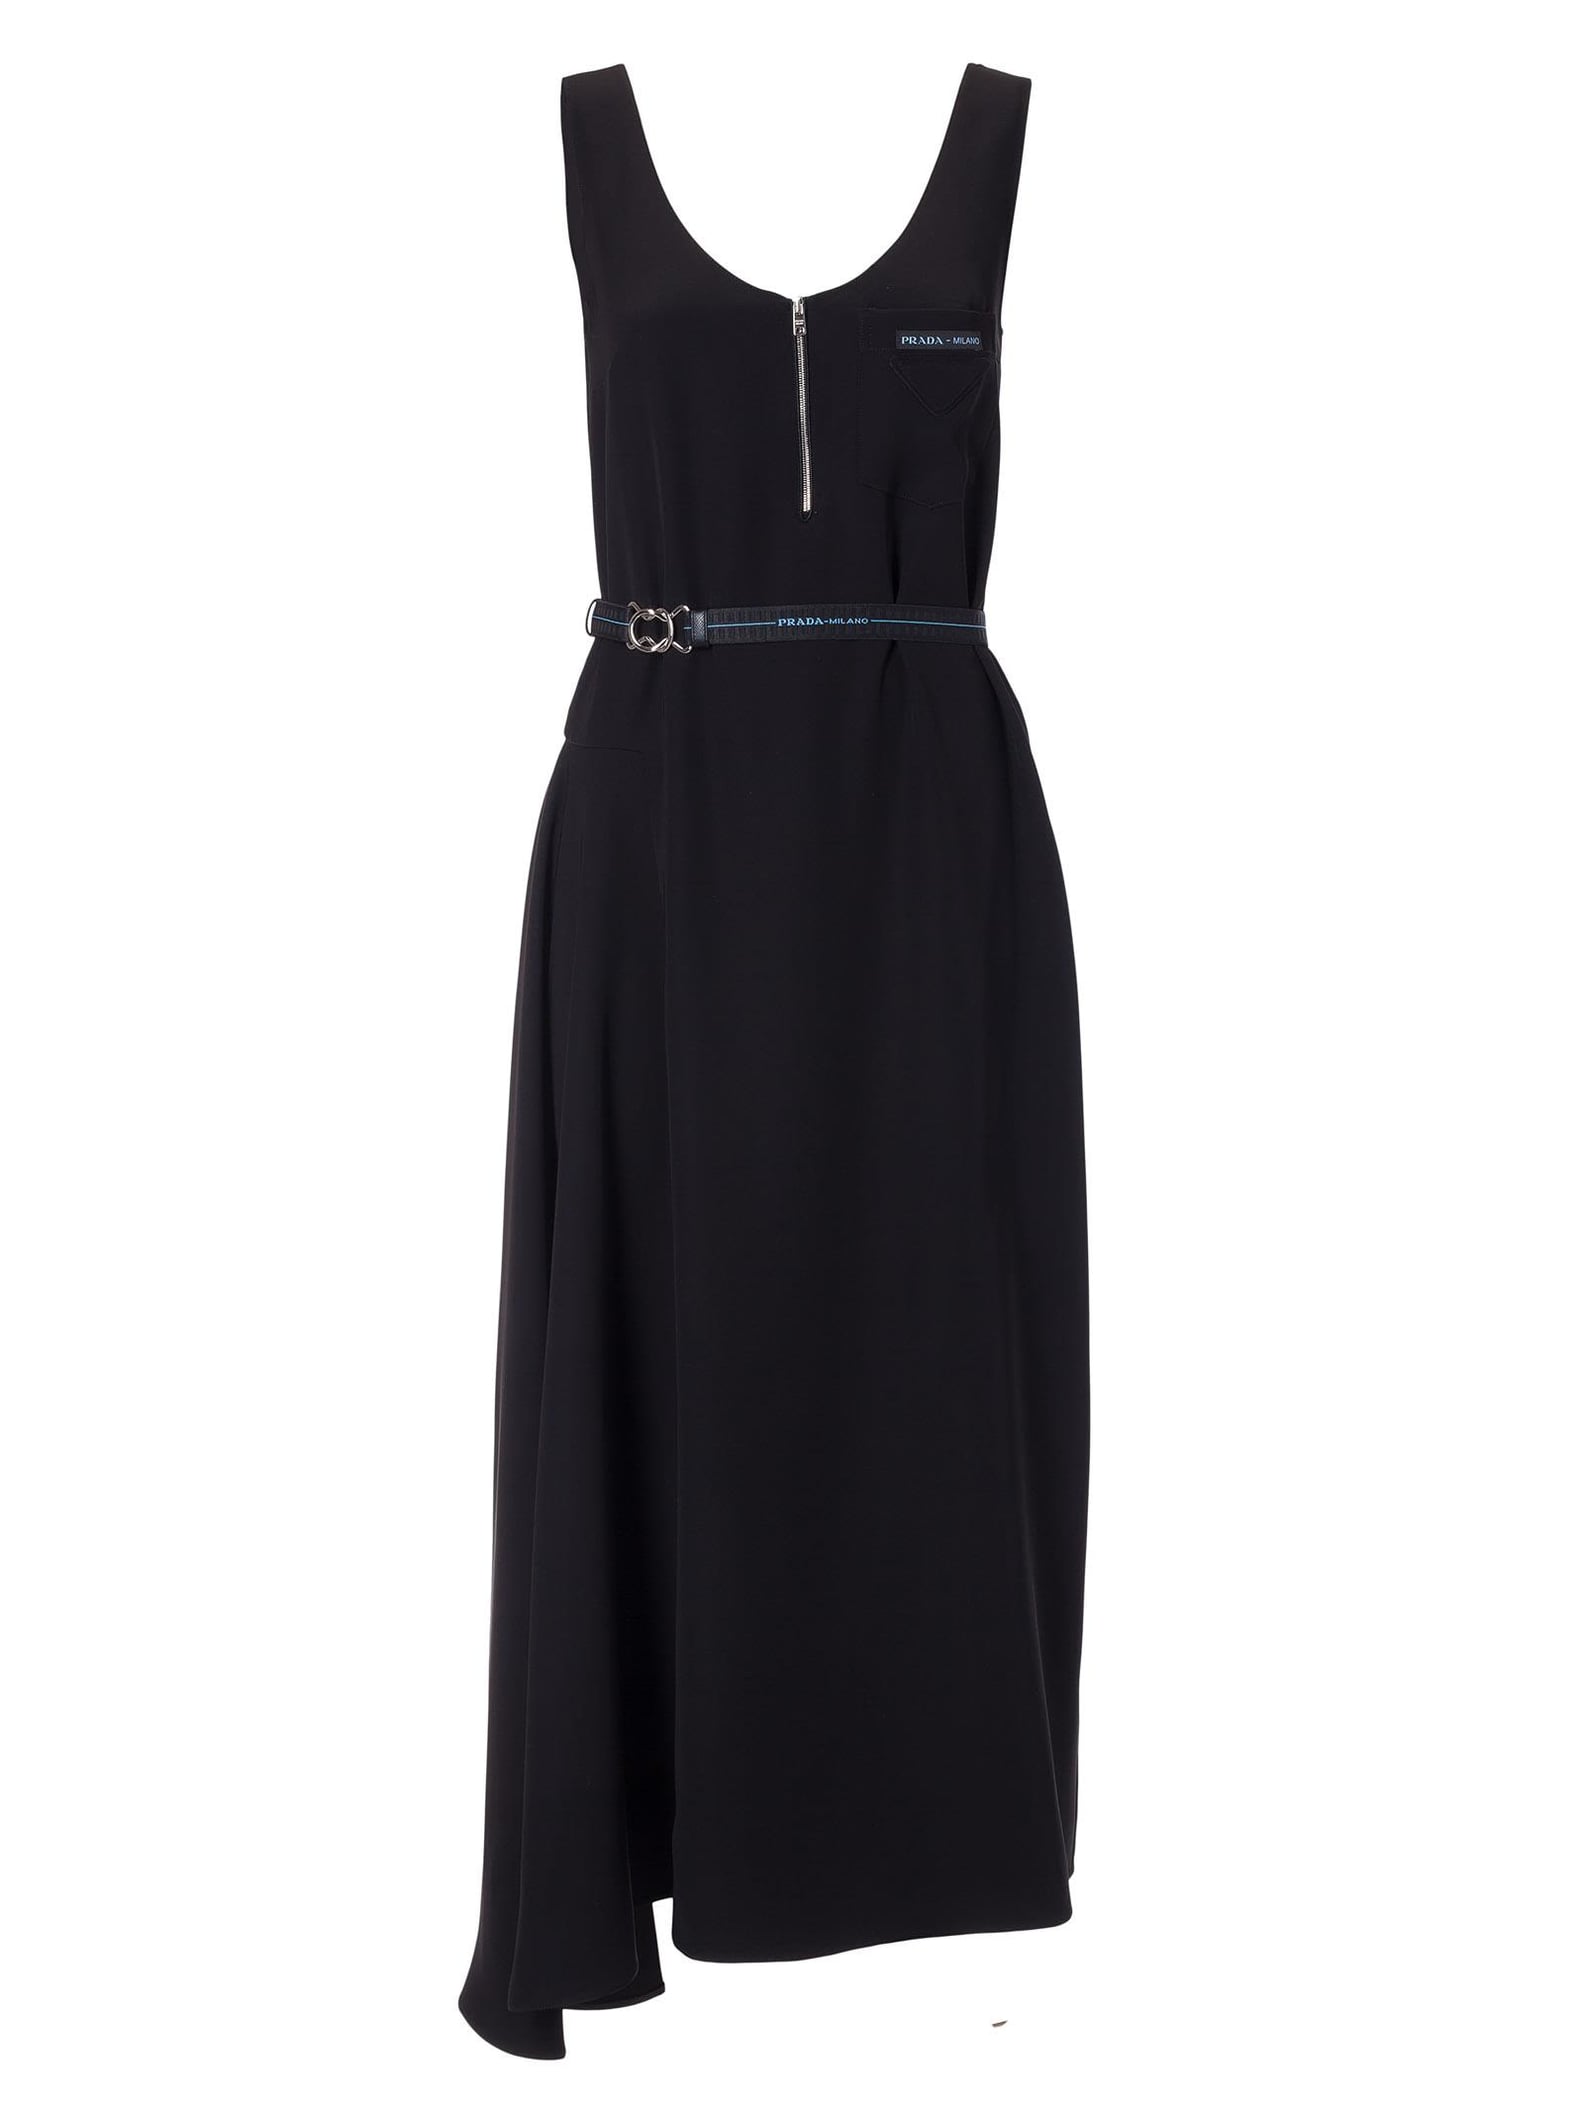 Meghan Markle Black Emilia Wickstead Dress | POPSUGAR Fashion